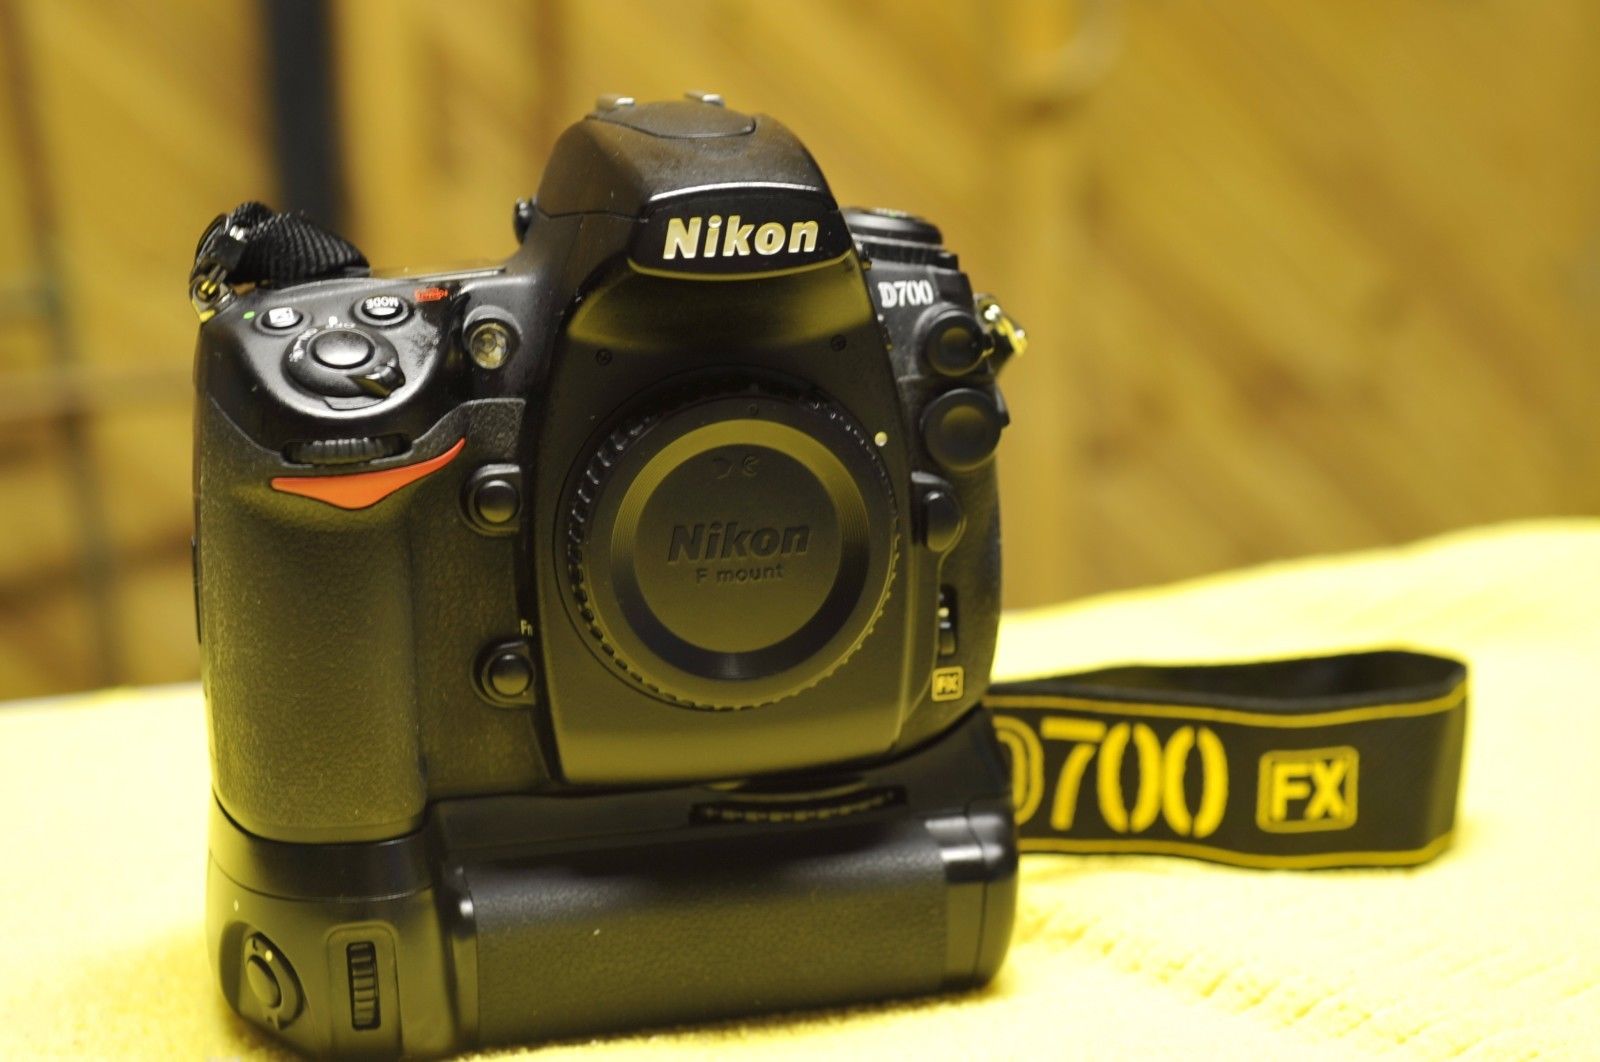 Nikon D D700 12.1MP Digital SLR Camera - Black (Body Only)